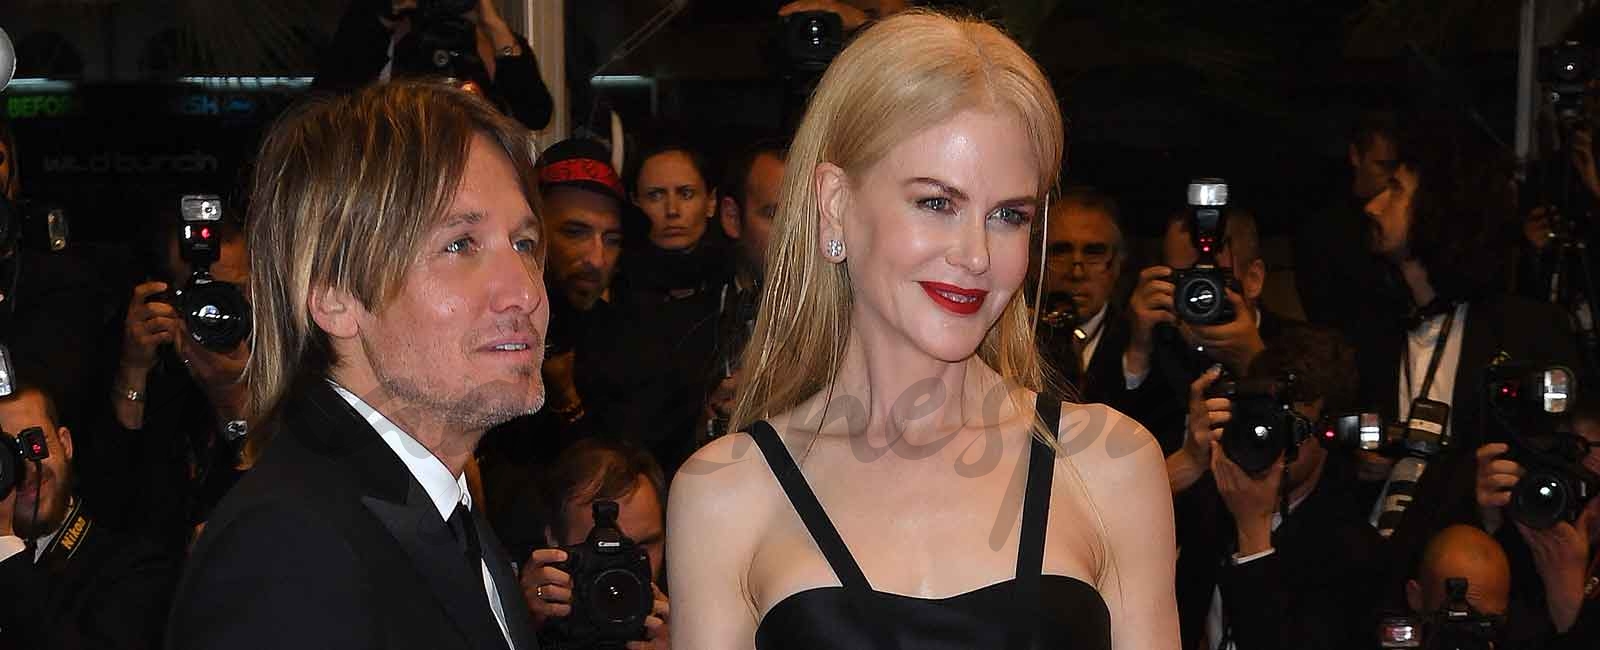 Nicole Kidman, espectacular “bailarina” en Cannes